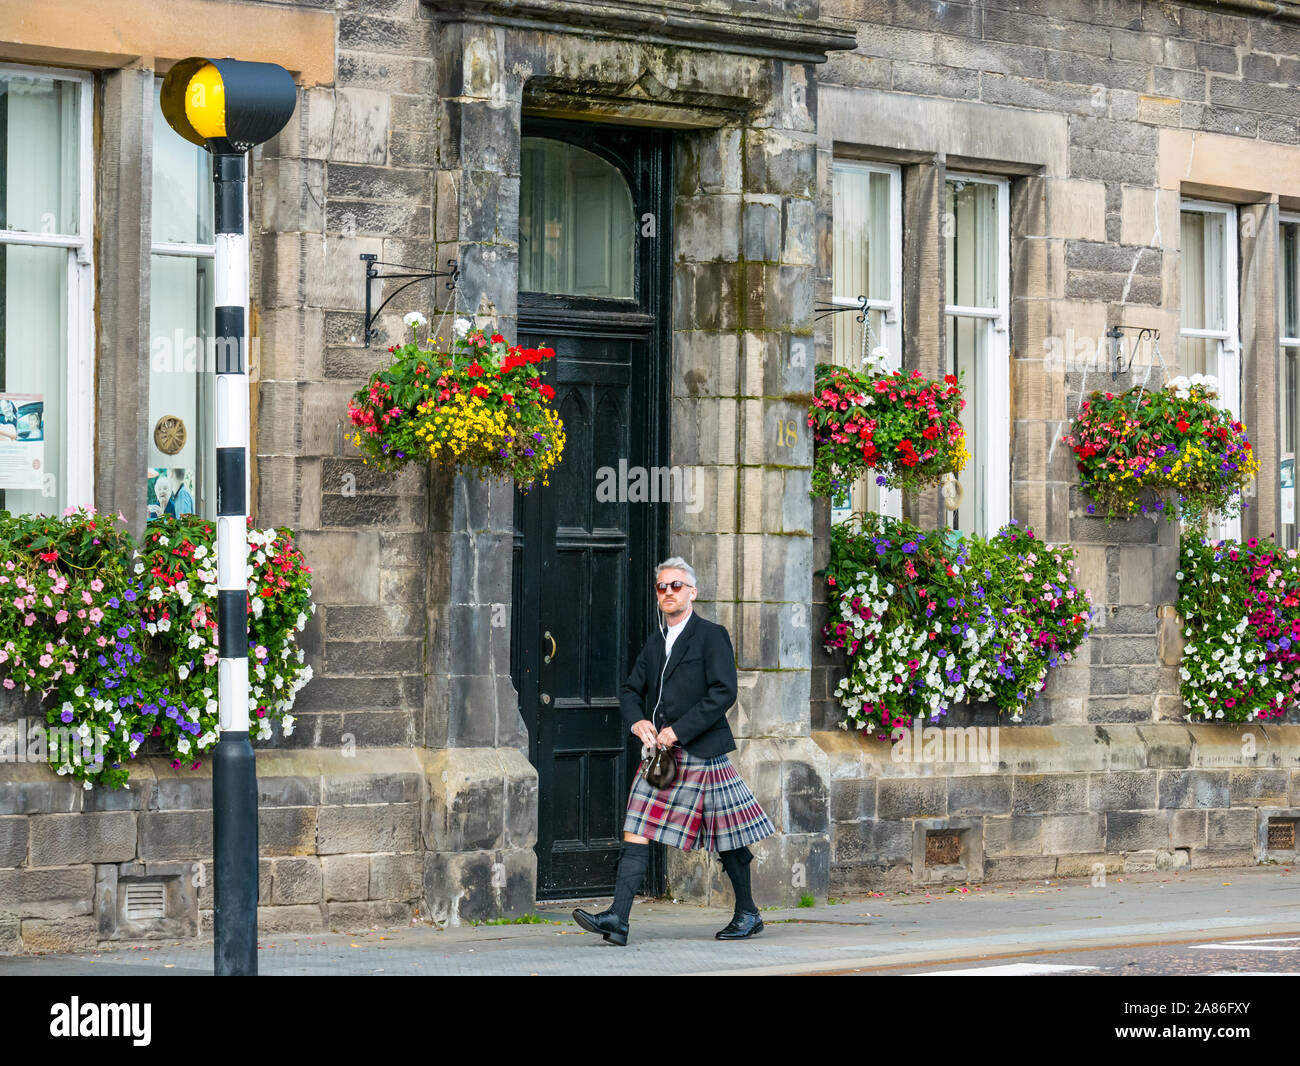 Scottish man wearing kilt walking in street by a Belisha beacon, Tay Street, Perth City, Scotland, UK Stock Photo